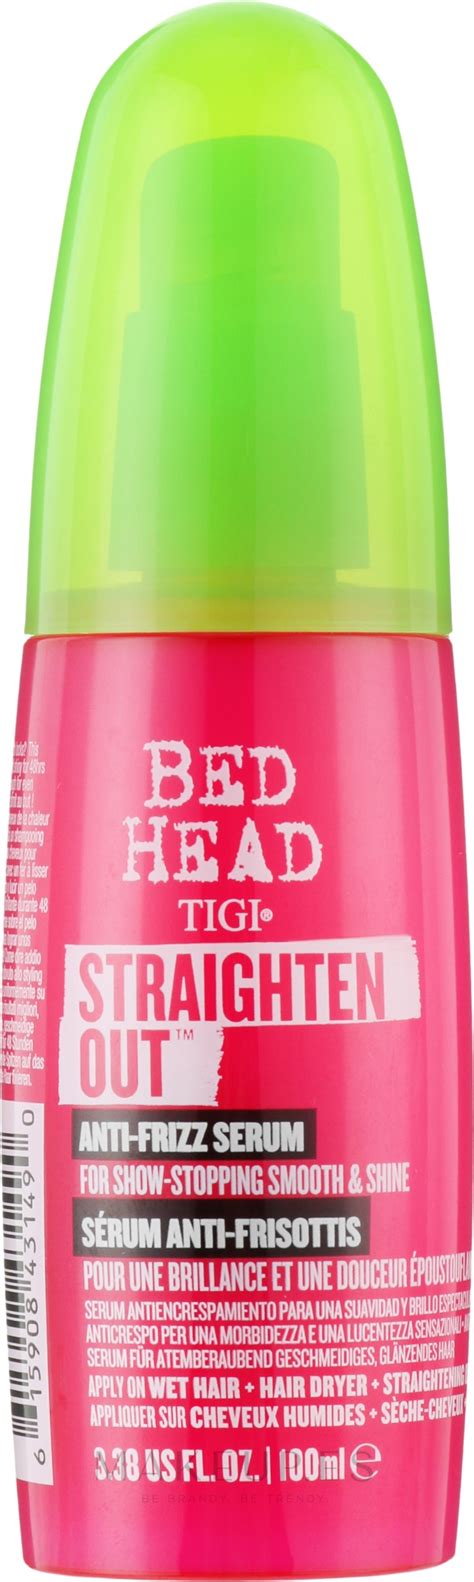 Tigi Bed Head Straighten Out Anti Frizz Serum S Rum